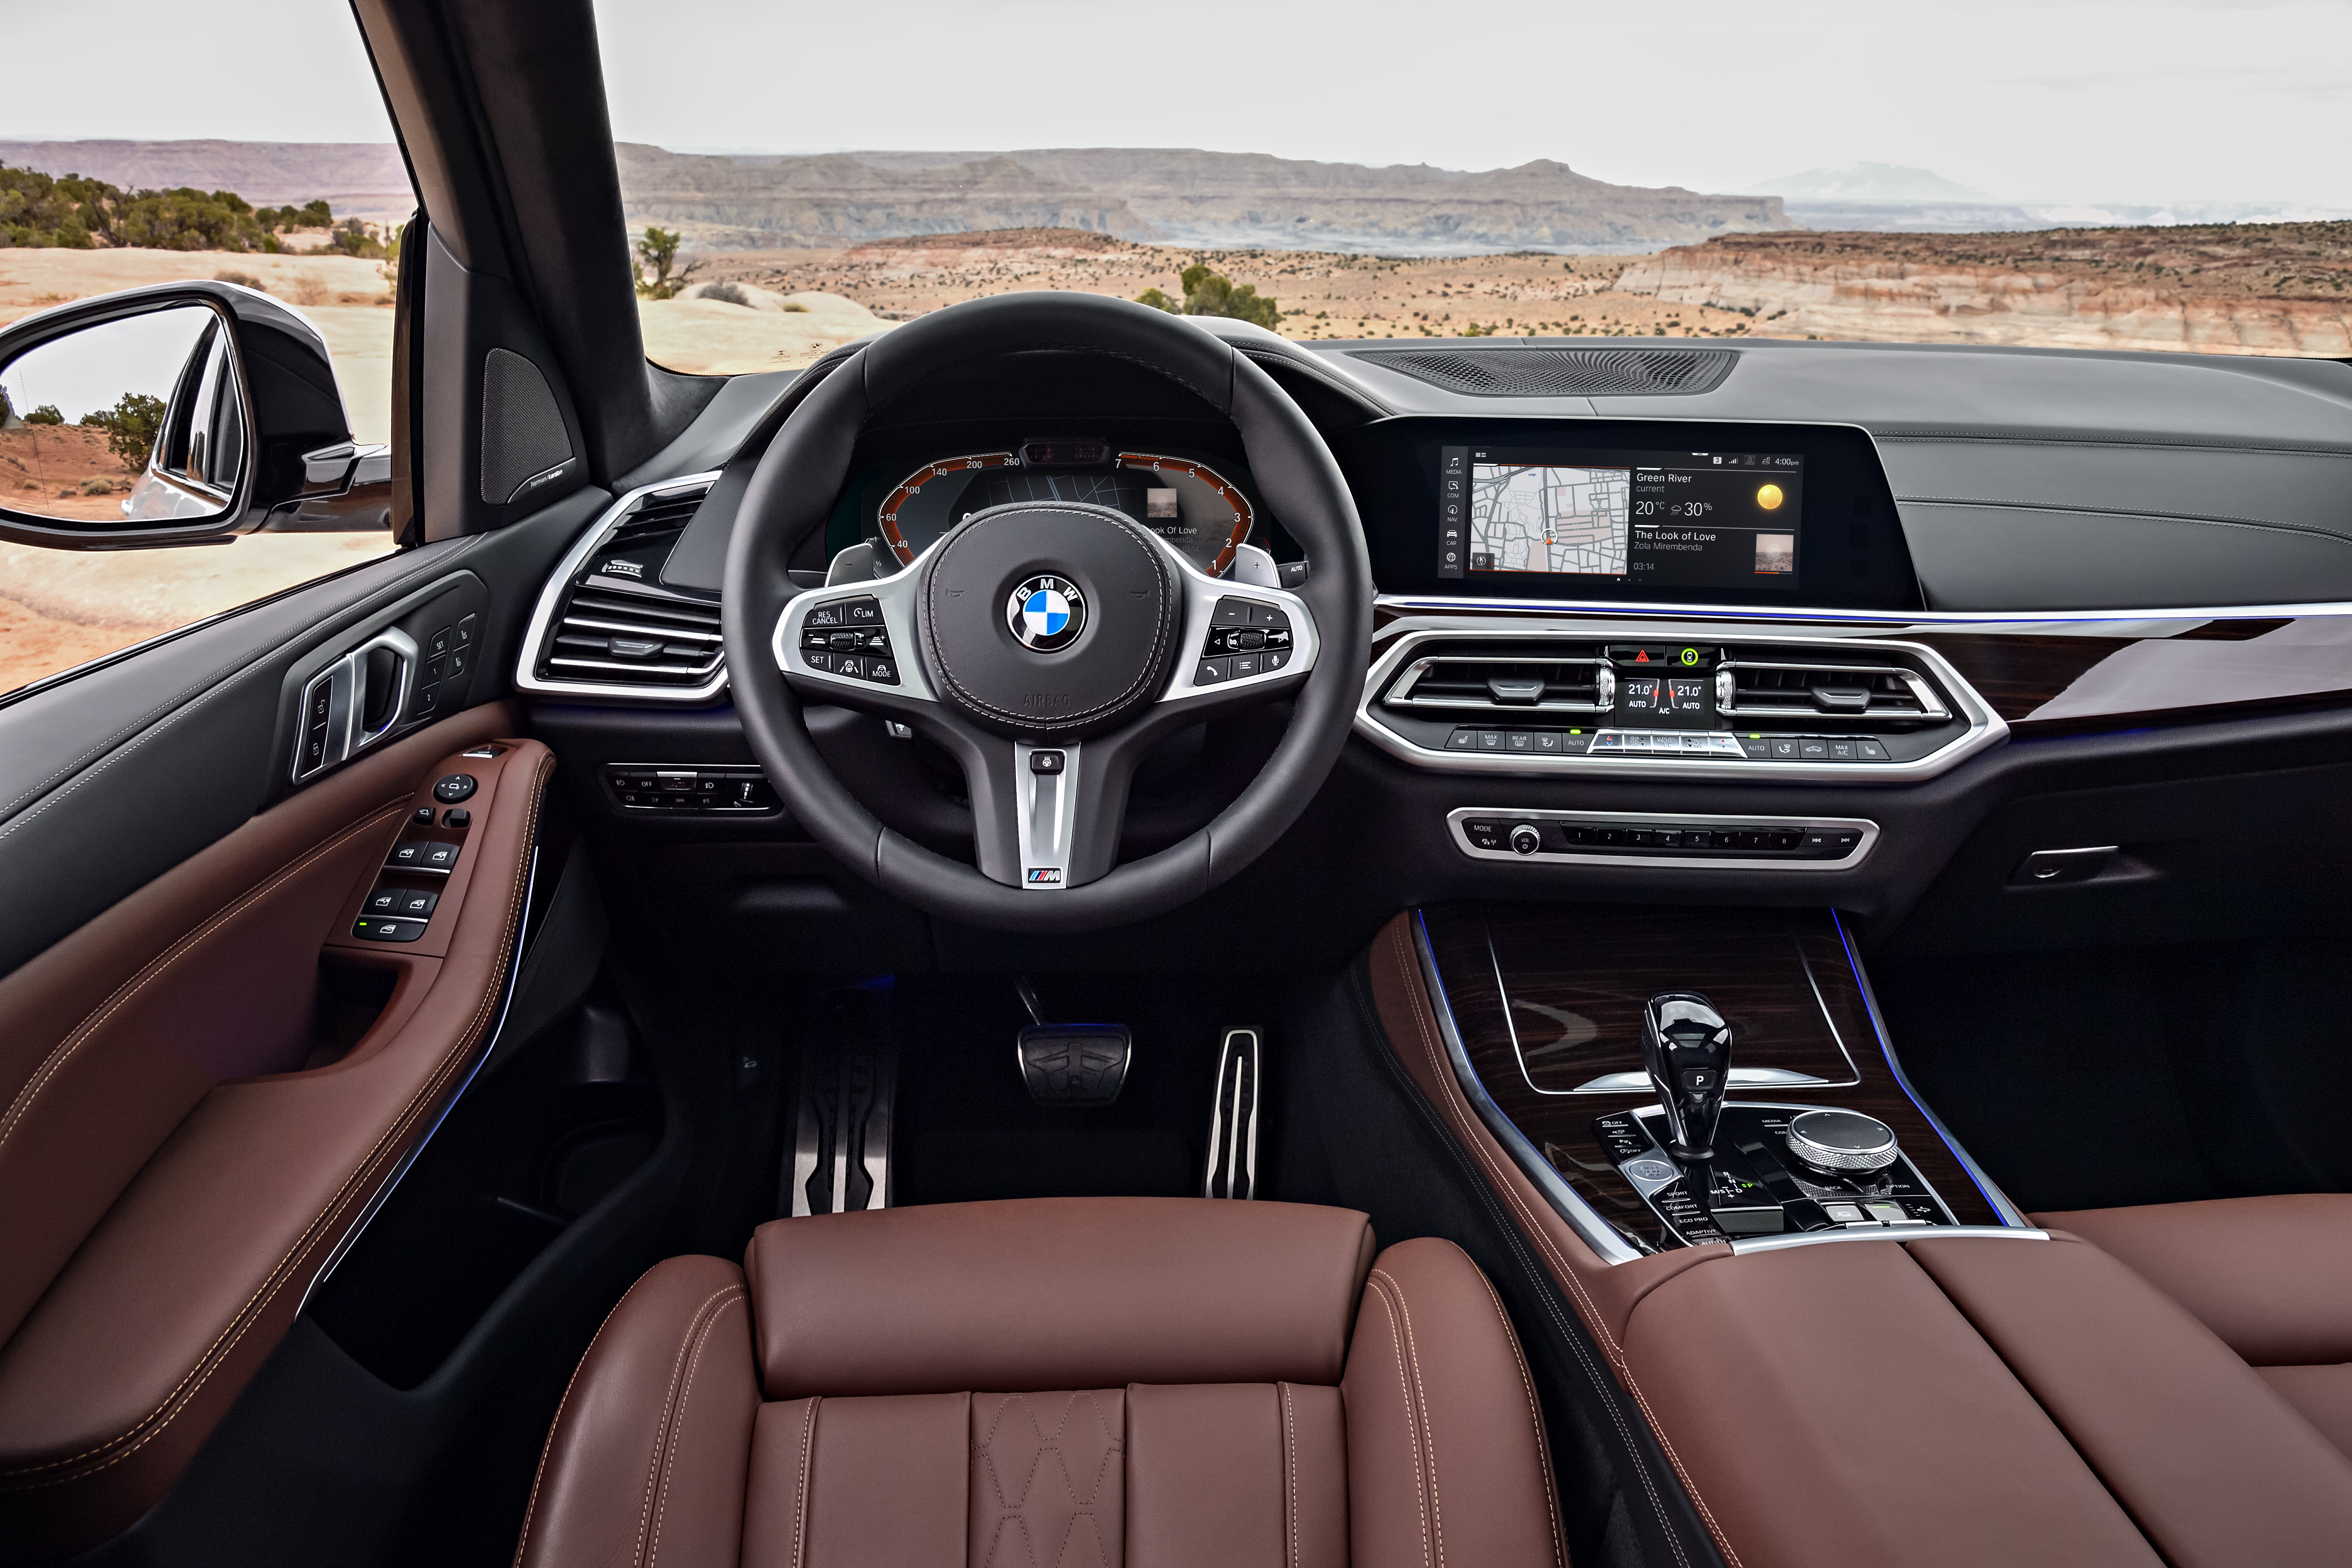 Bmw x5 комплектации. BMW x5 g05. Новый BMW x5 g05. BMW x5 салон. BMW x5 Interior.